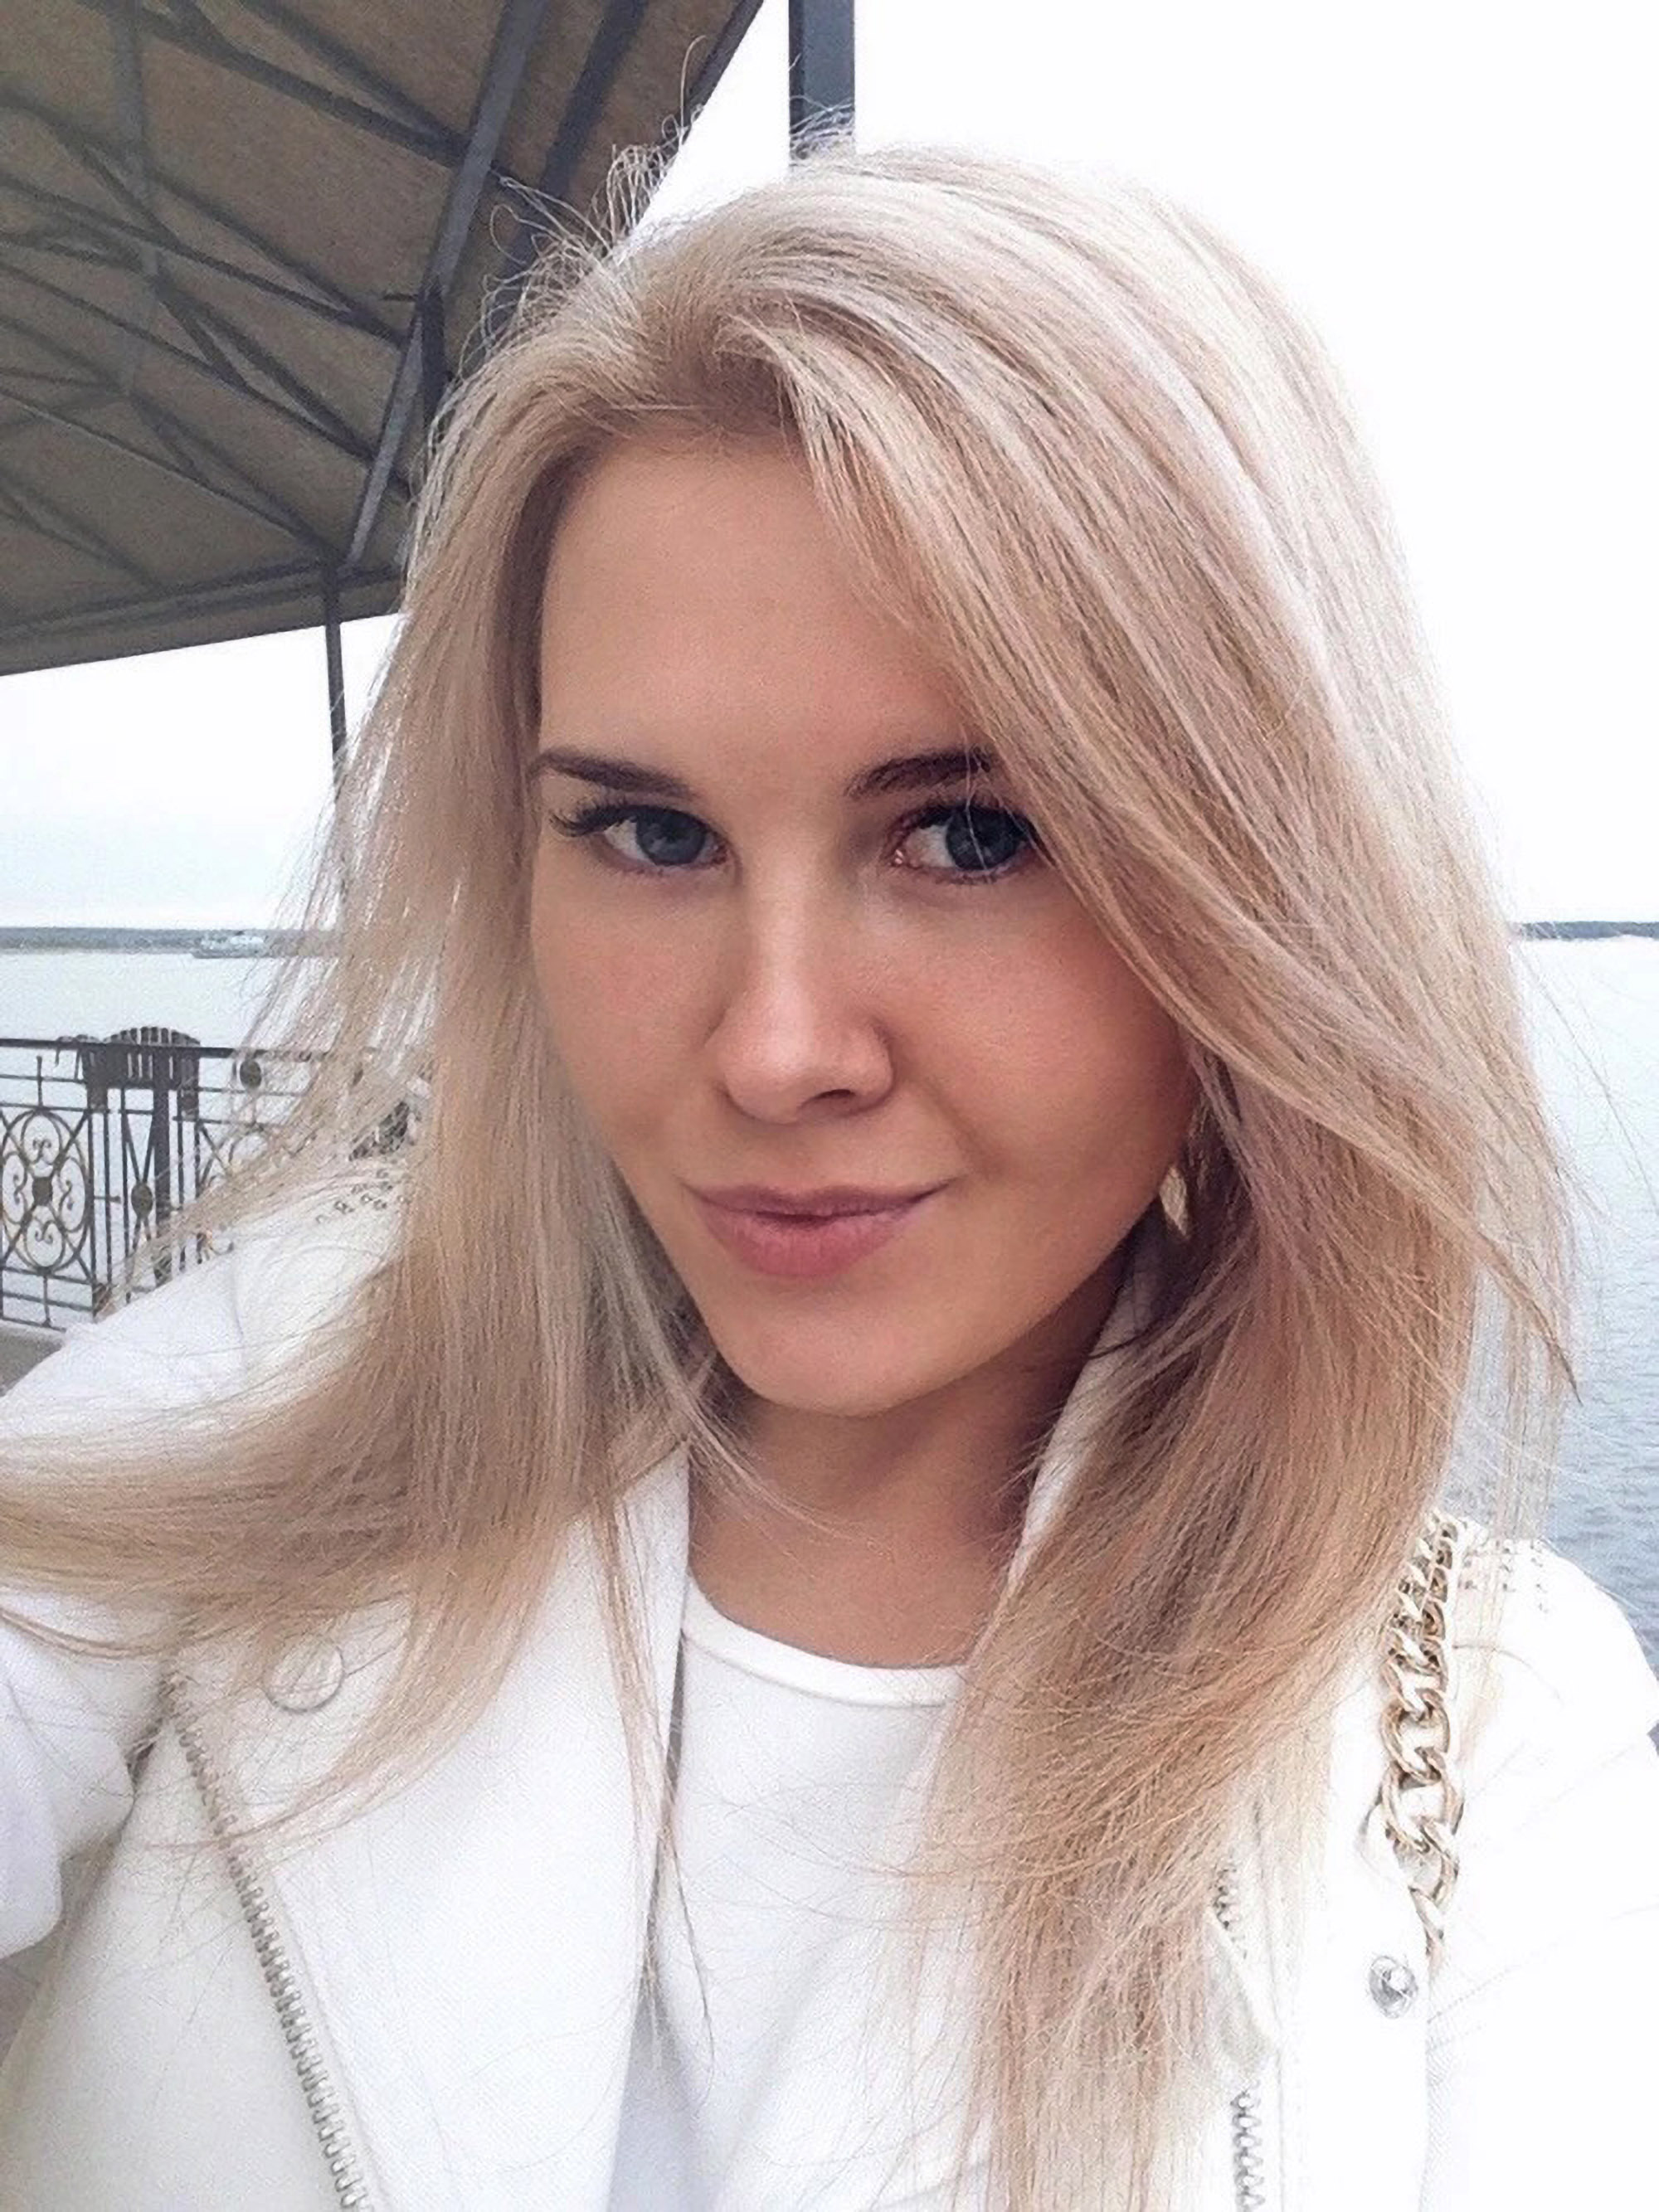 Lyuti had previously sought to pin the blame on his partner Oxana Mironova, 34